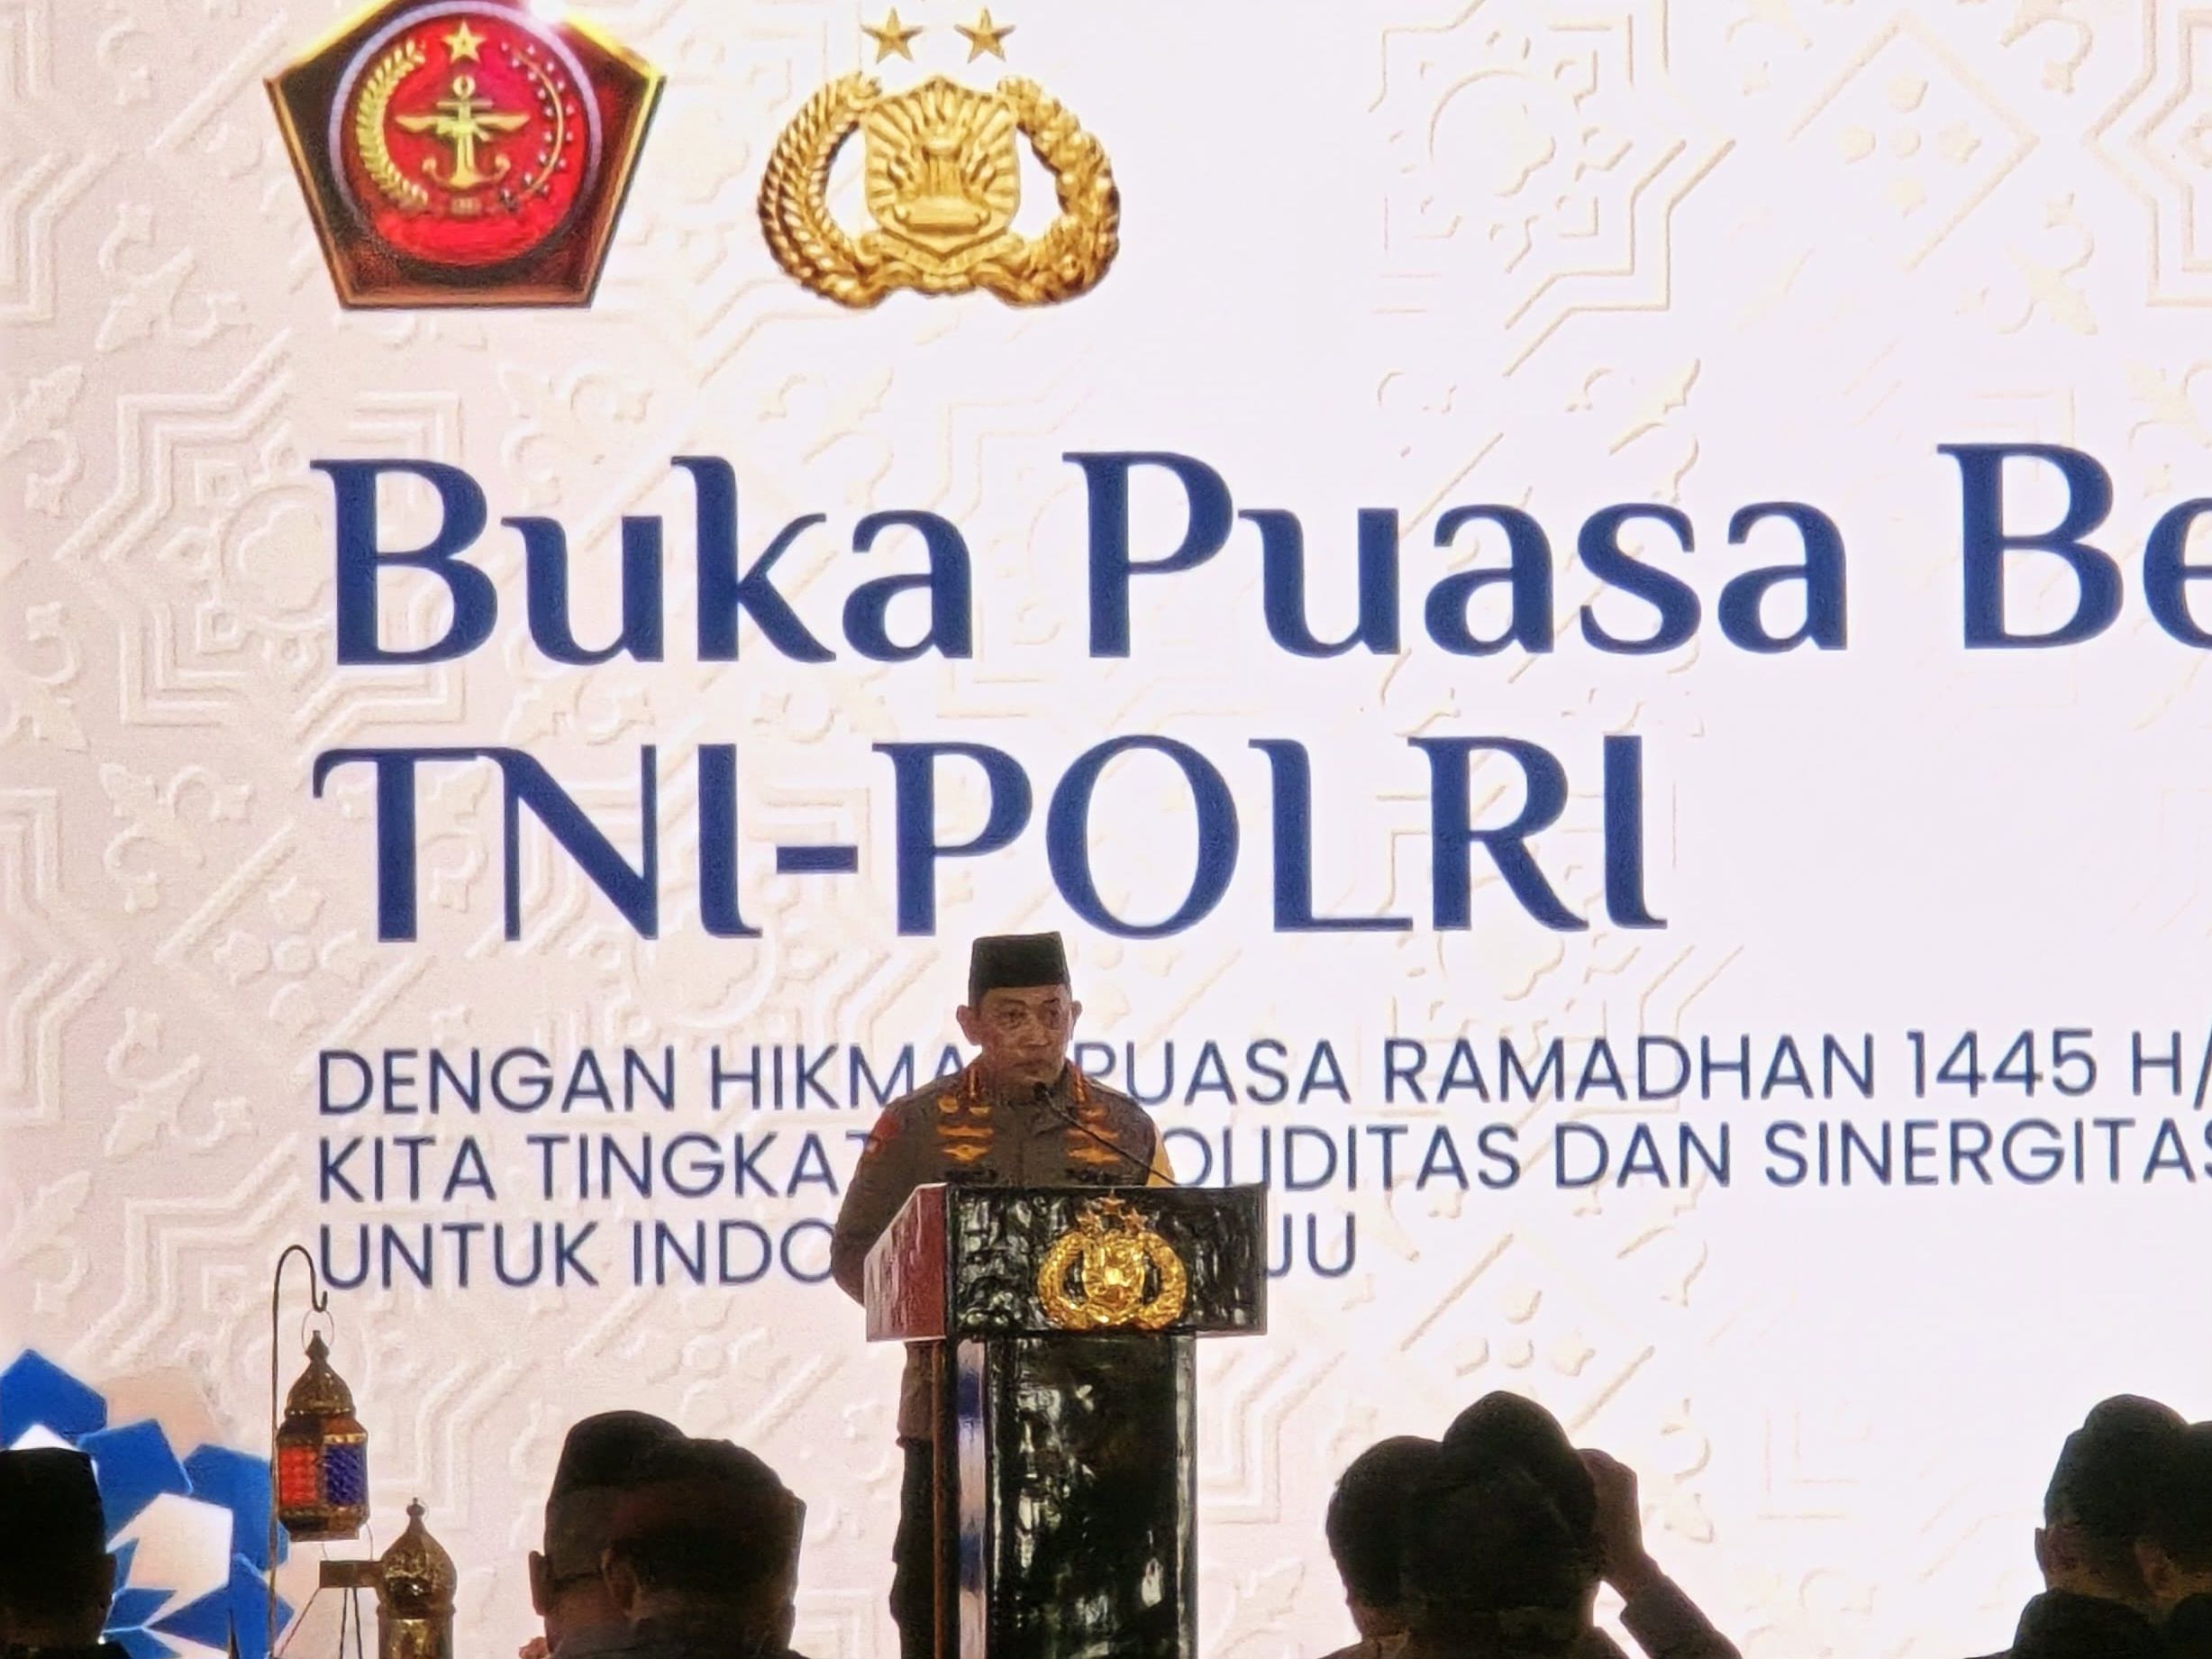 Kapolri, Panglima TNI, dan Jusuf Kalla Buka Puasa Bareng Jajaran TNI-Polri